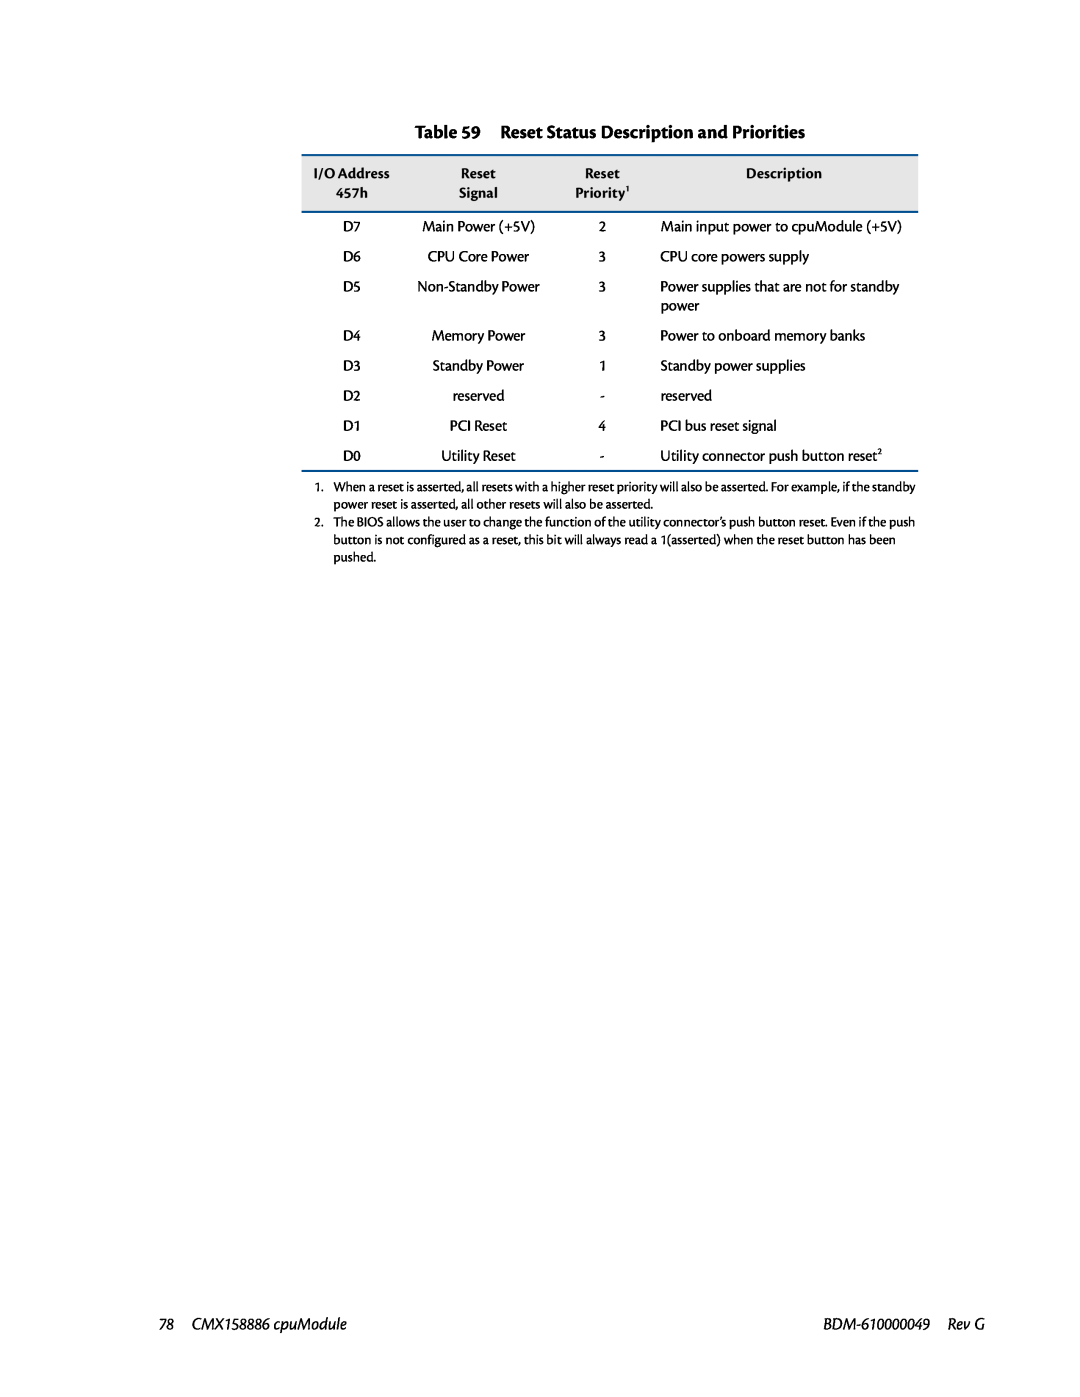 IBM user manual Reset Status Description and Priorities, 78 CMX158886 cpuModule, BDM-610000049 Rev G 